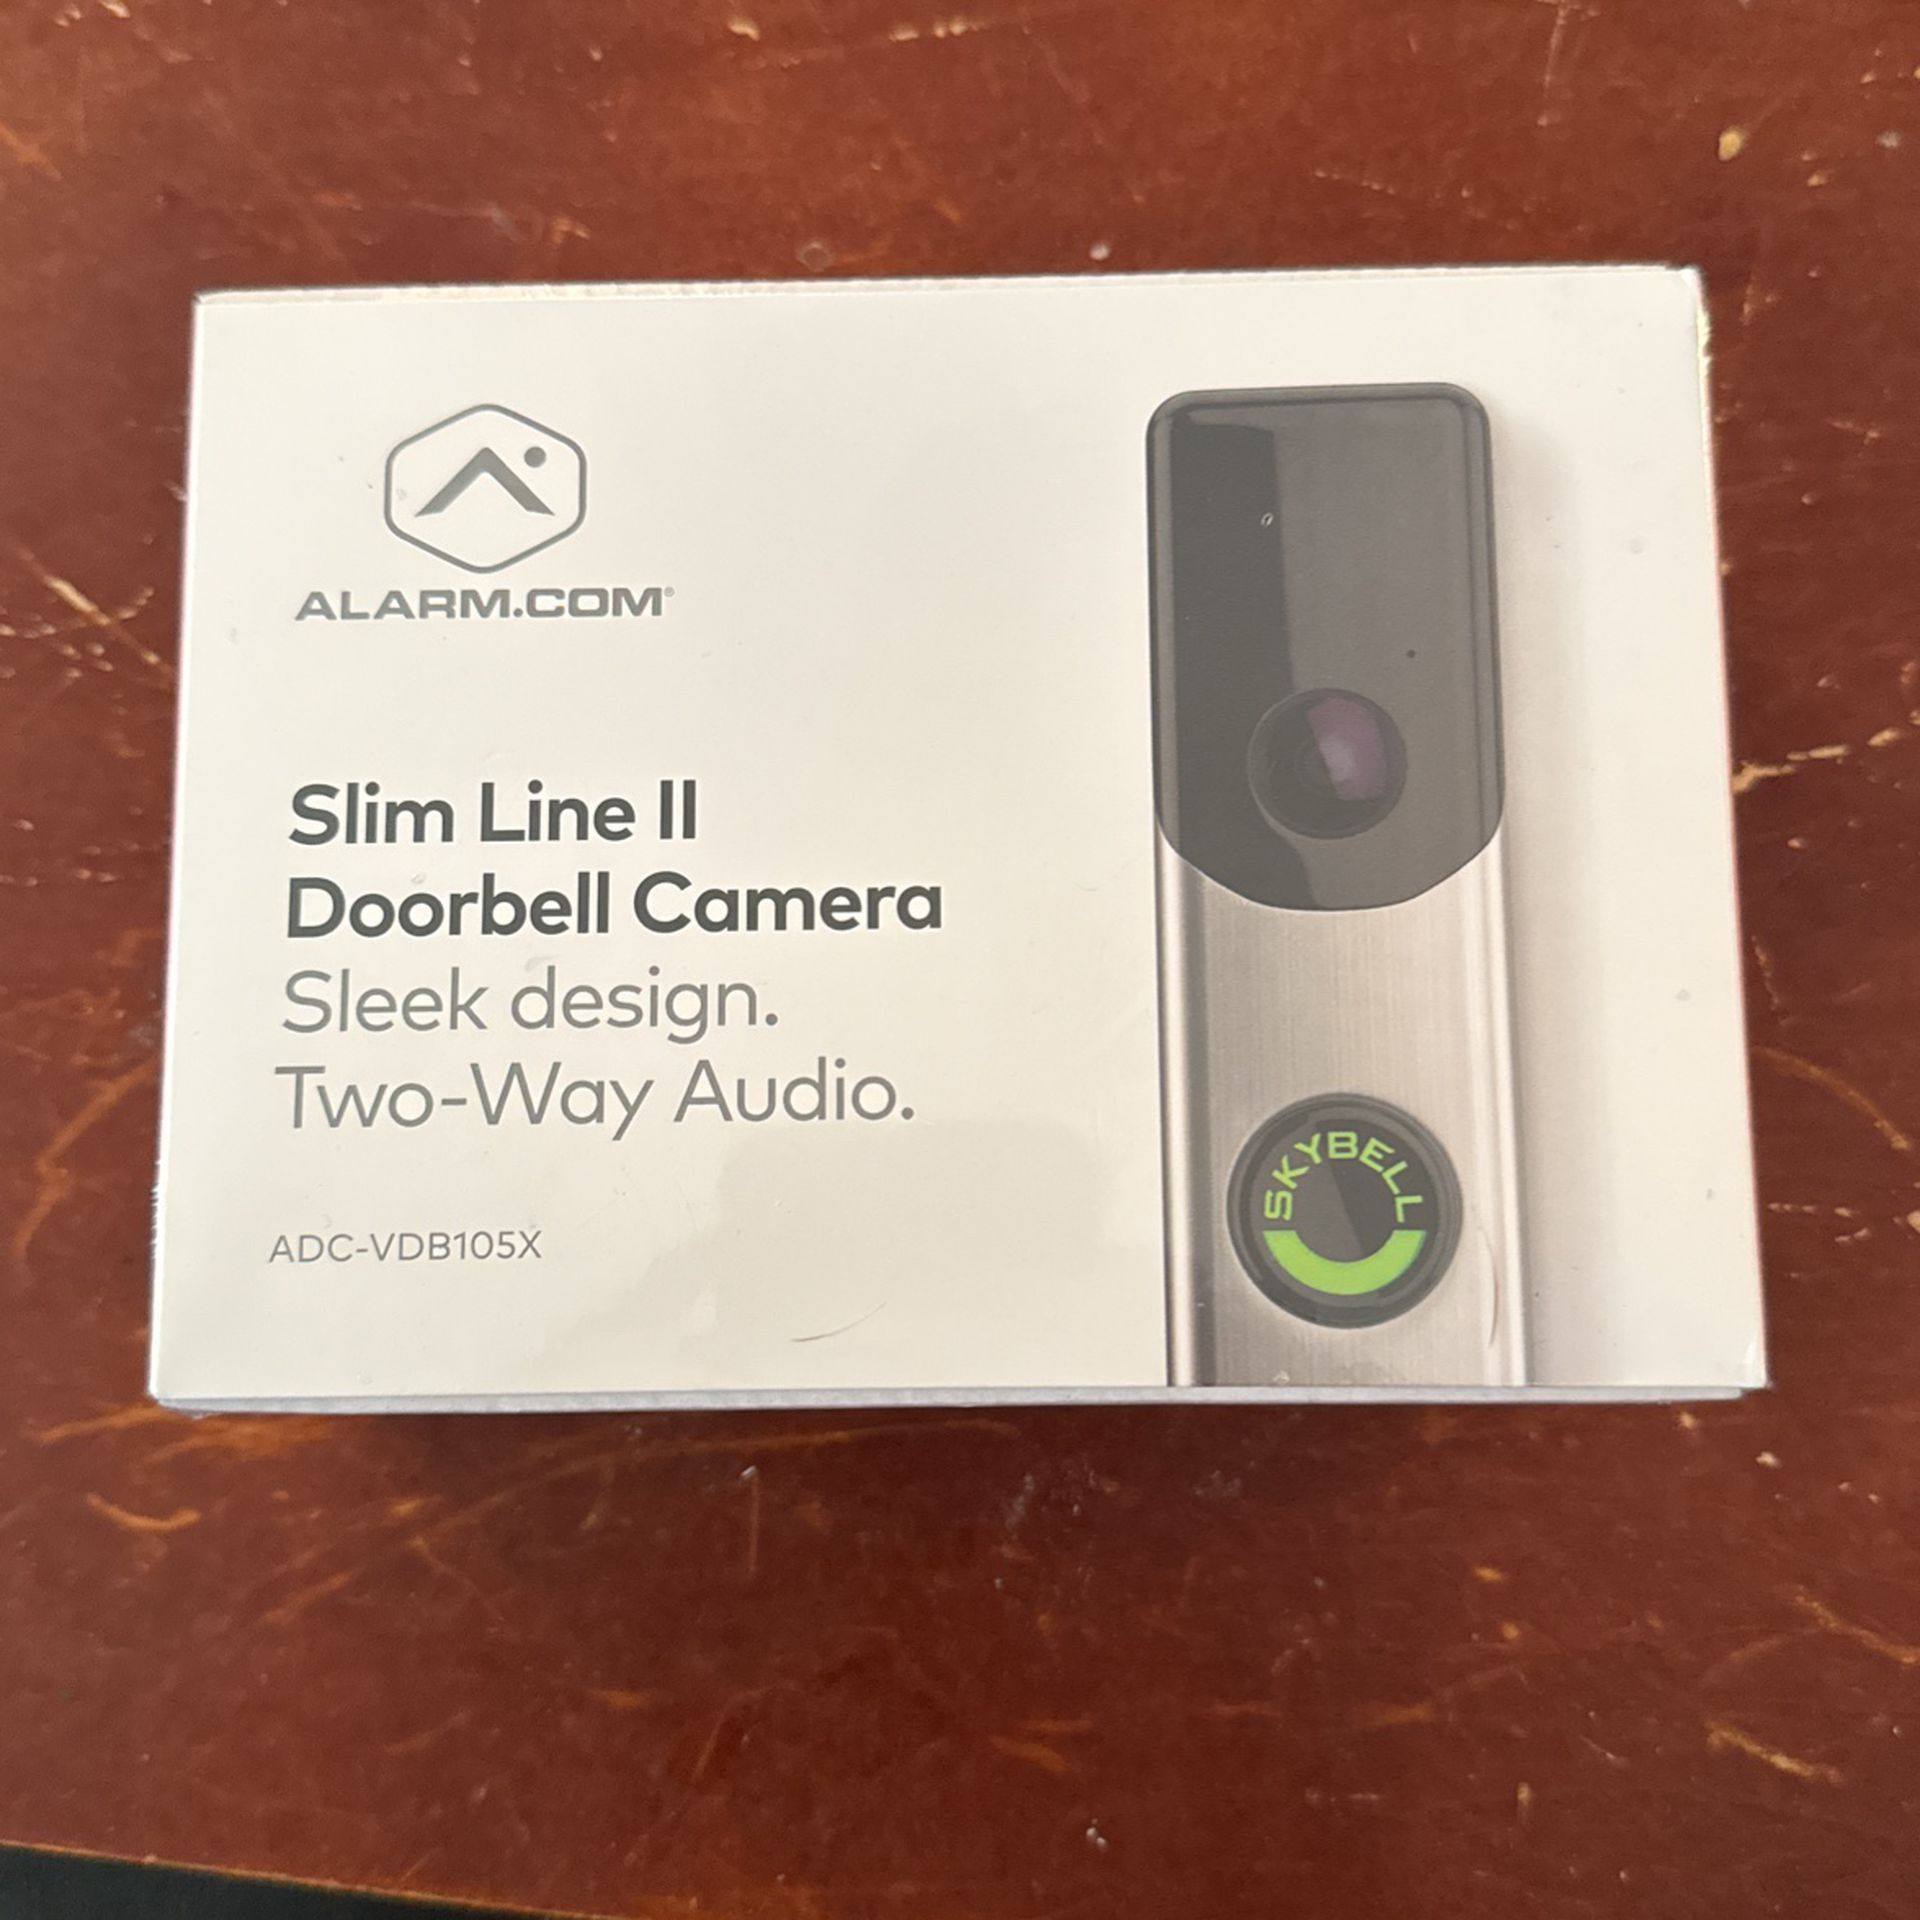 https://offerup.com/redirect/?o=QWxhcm0uY29t Skybell Slim Line 2 Doorbell Camera Silver ADC-VDB105X